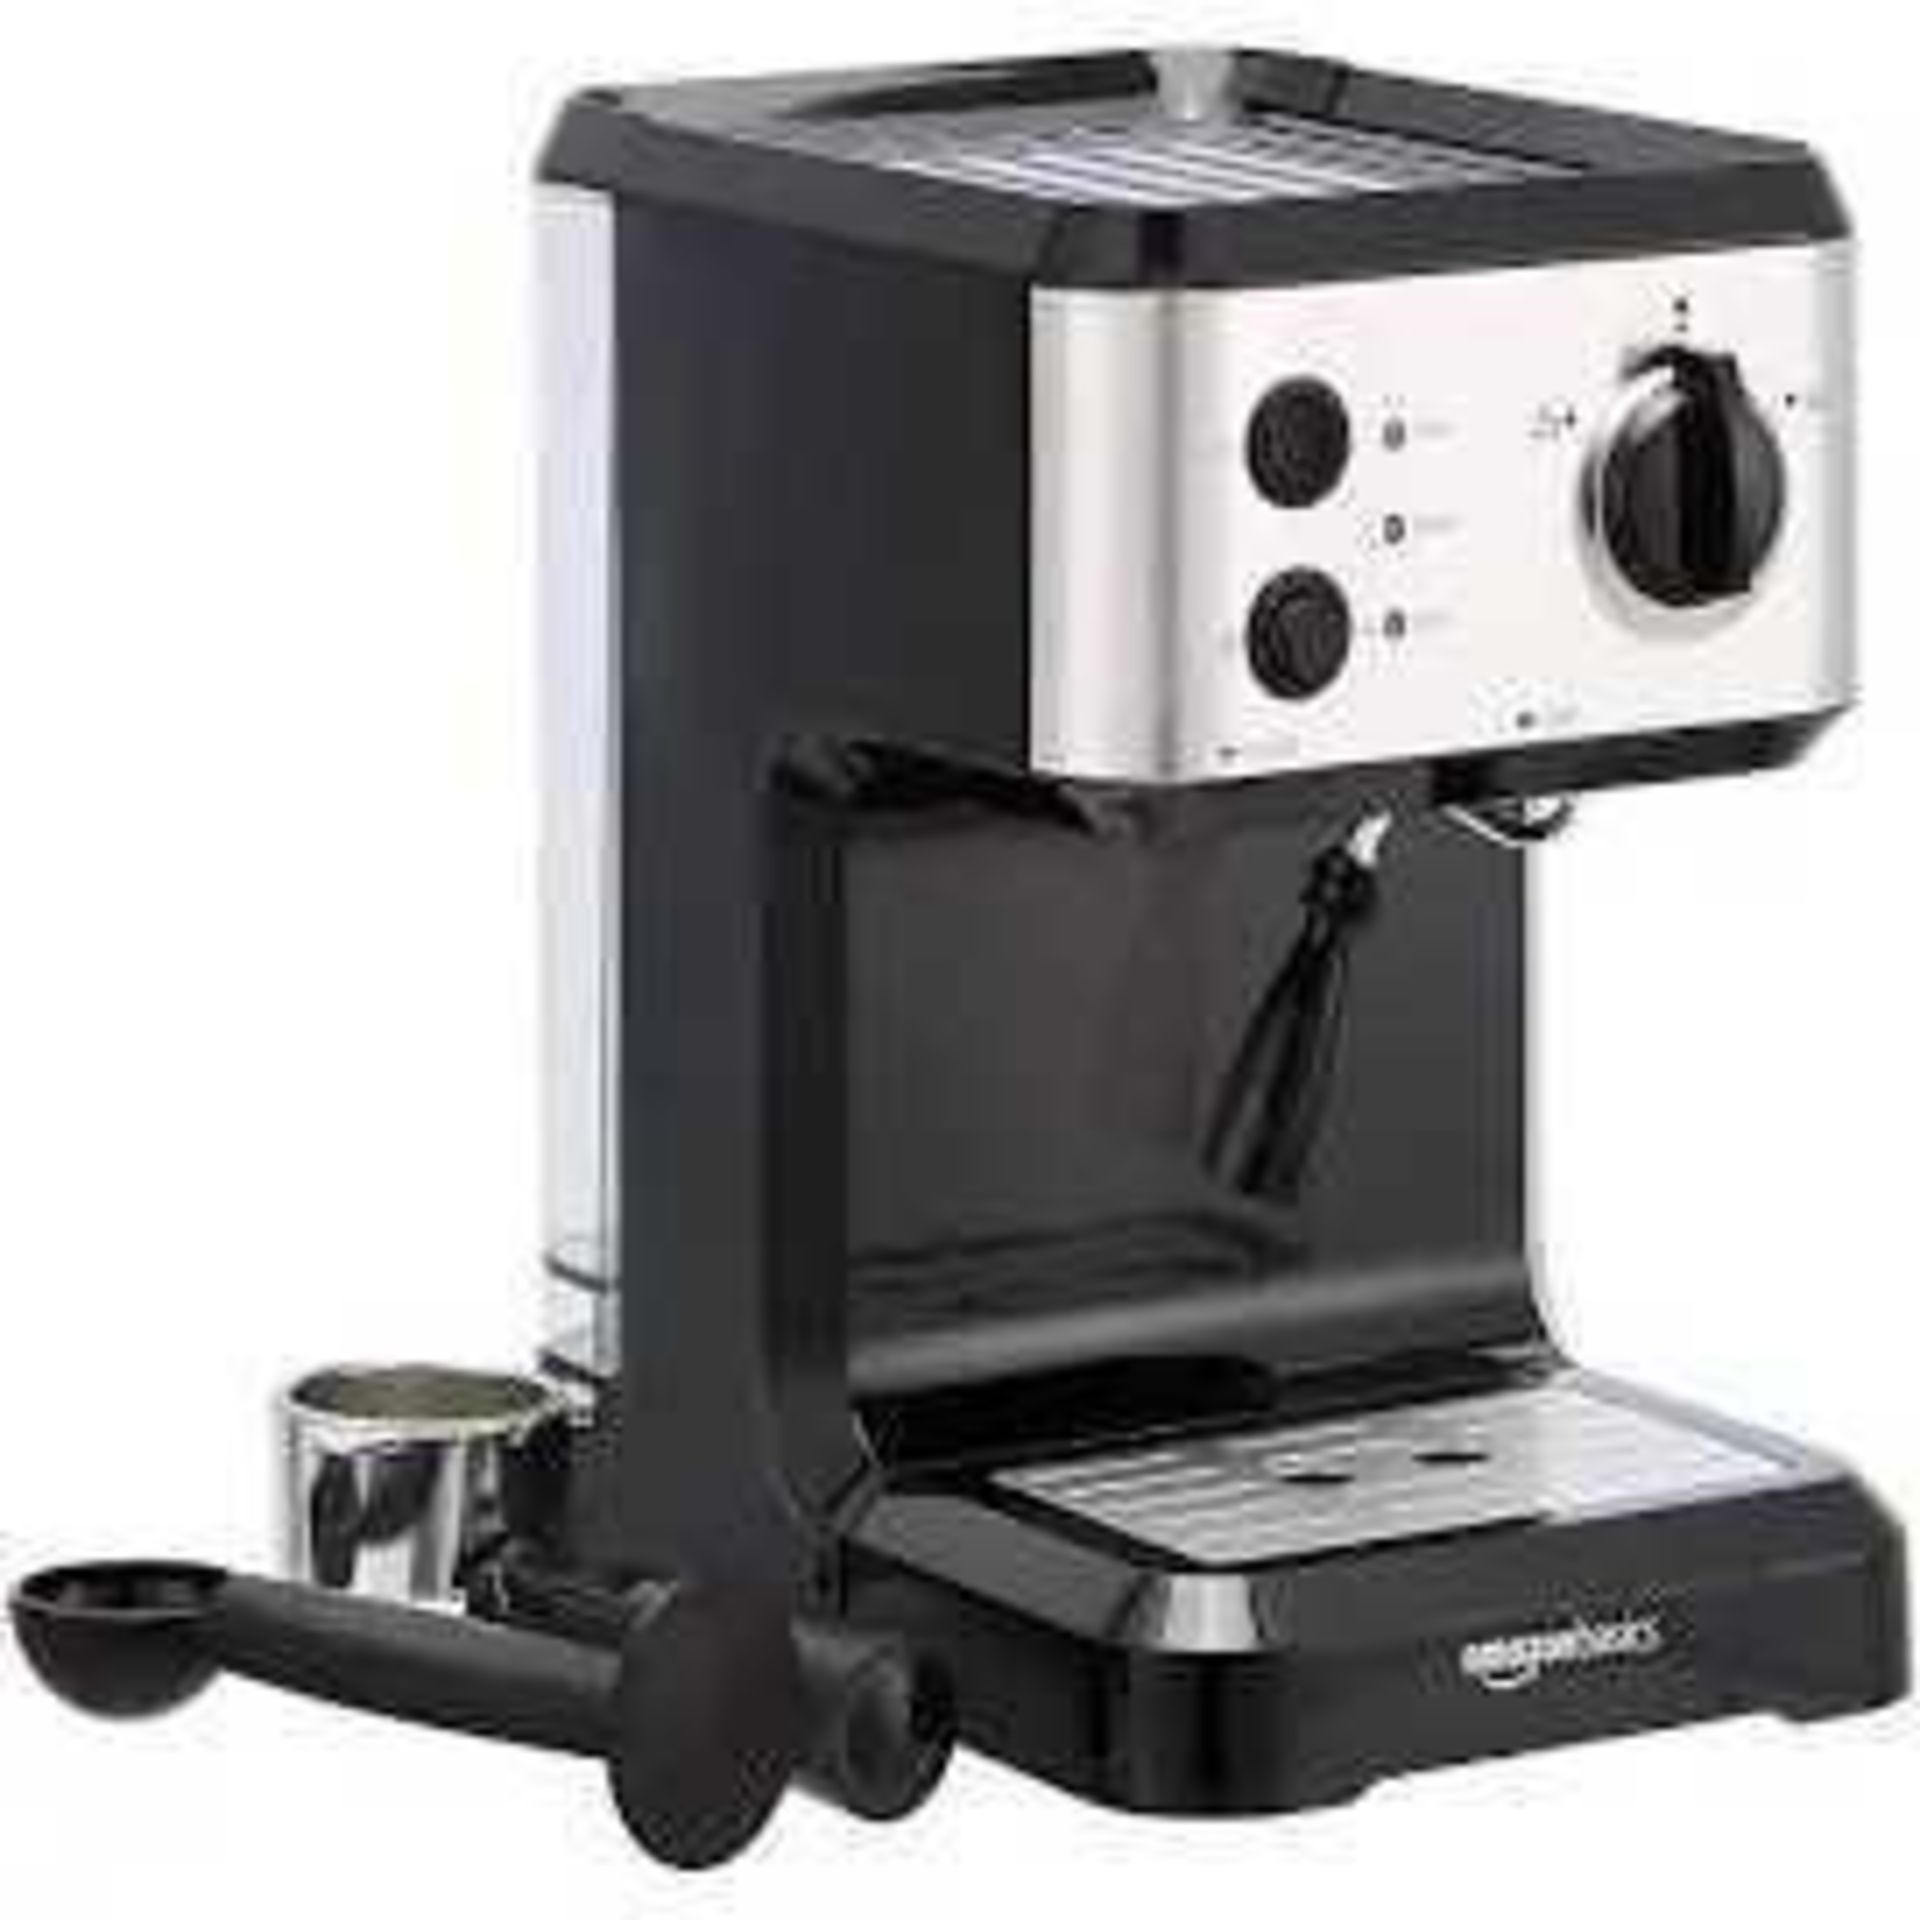 RRP £100 Amazon Basics Espresso Coffee Machine With Milk Frother Black/Silver